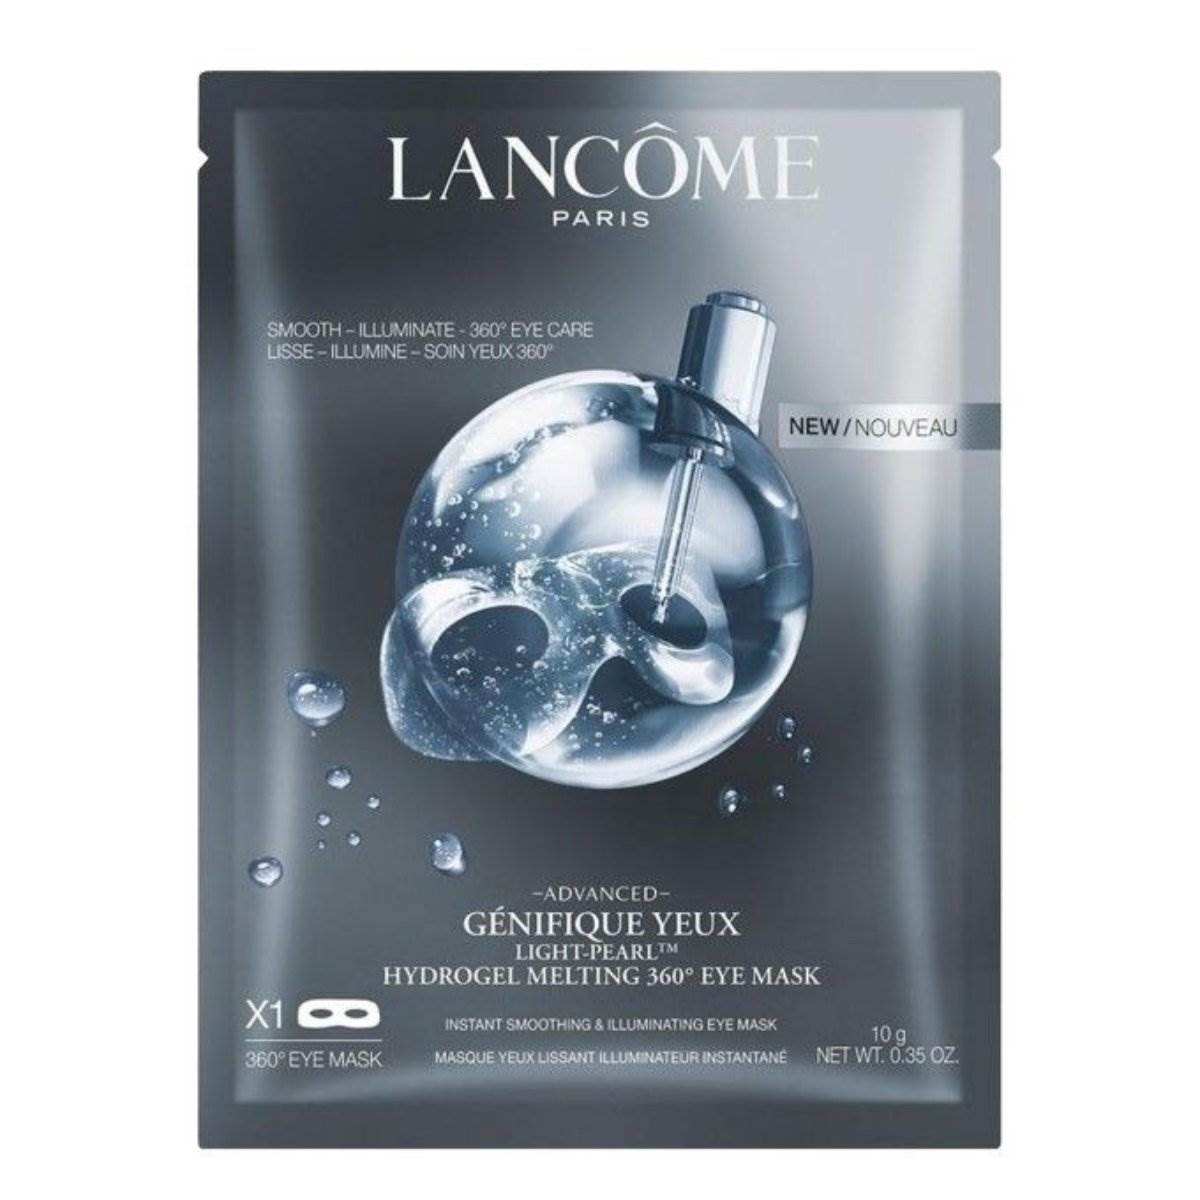  Lancôme – Advanced Génifique Light Pearl Hydrogel Melting 360 Eye Mask hidrira deo oko očiju. 